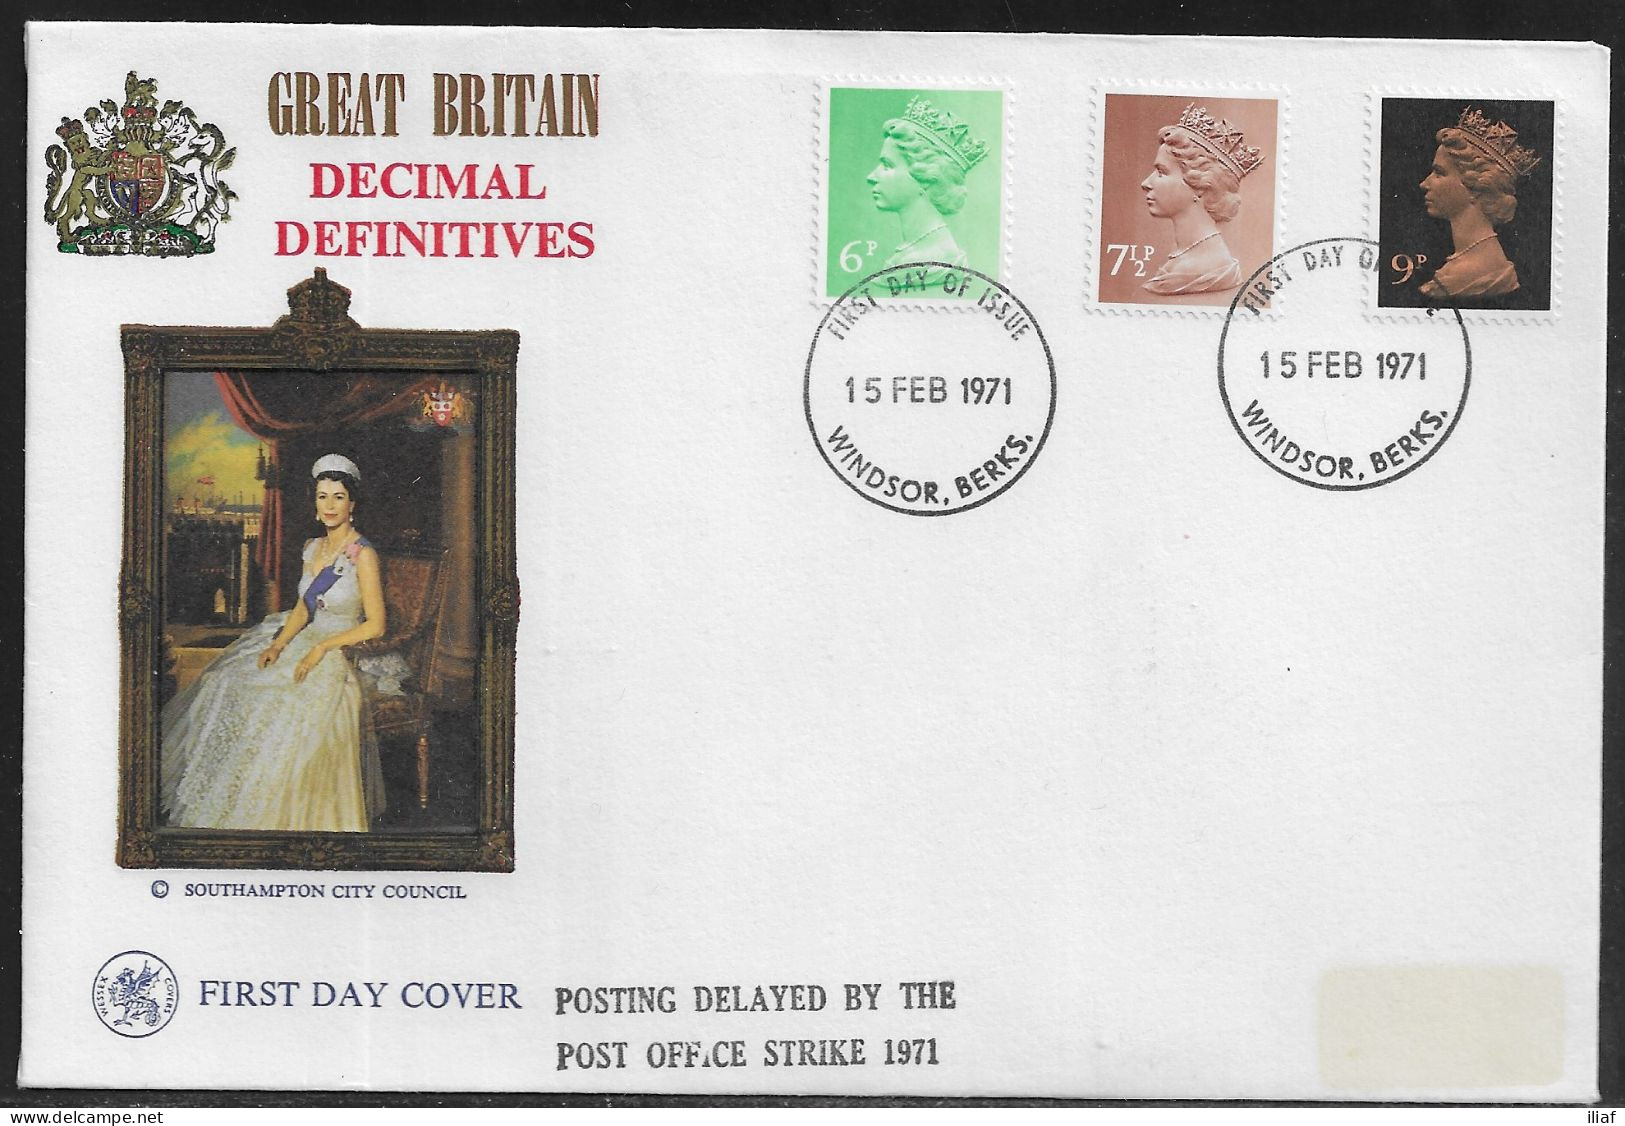 United Kingdom Of Great Britain. FDC Sc.MH57,63,66 .Queen Elizabeth II - Decimal Machin FDC Cancellation On FDC Envelope - 1971-1980 Decimal Issues